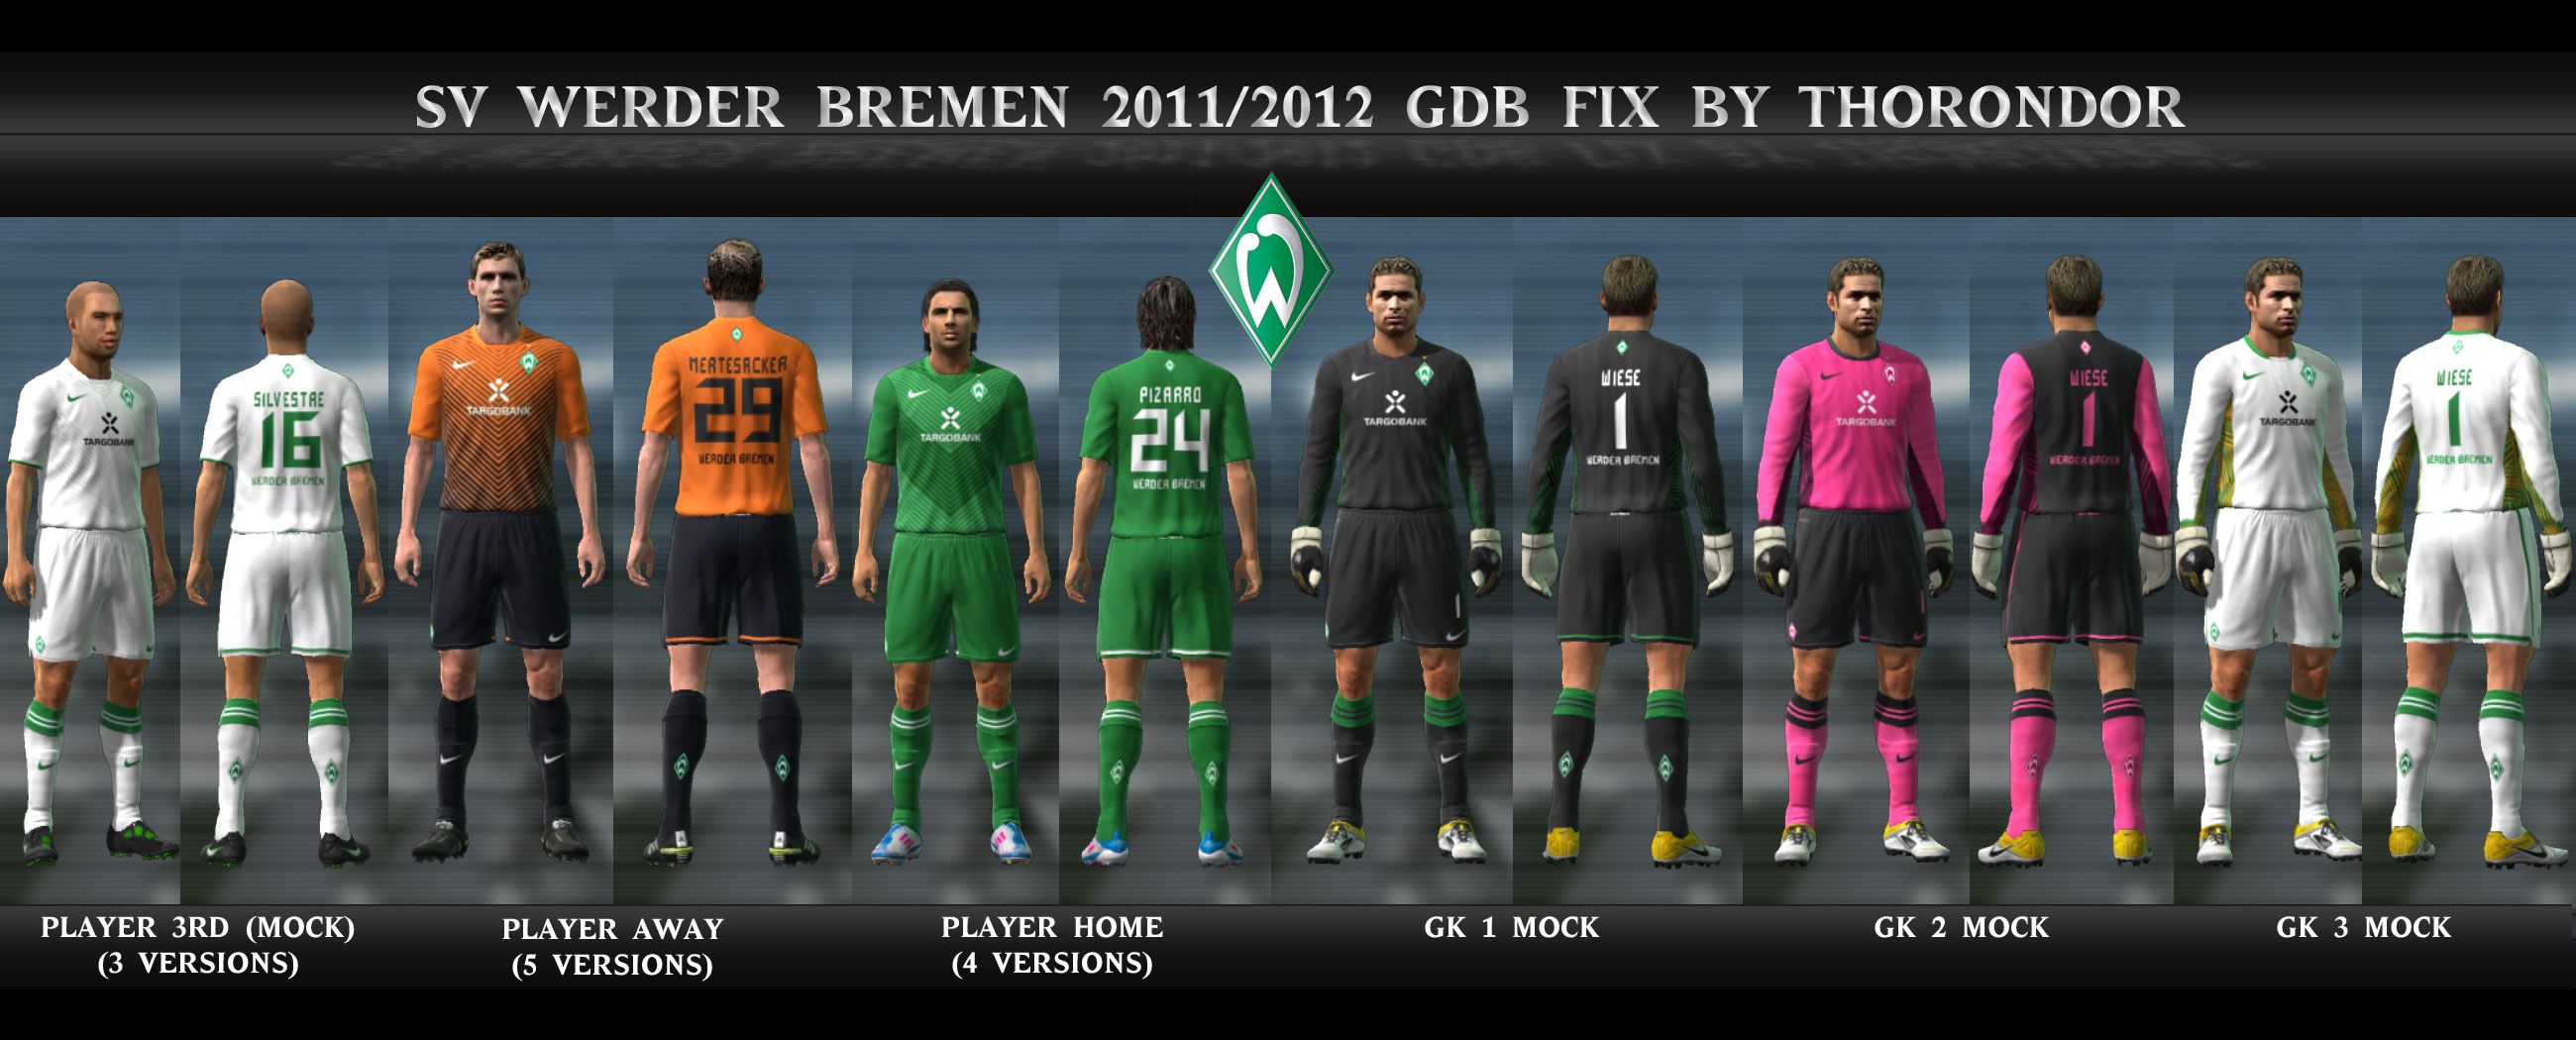 PSG Techfit GDB Folder - Pro Evolution Soccer 2011